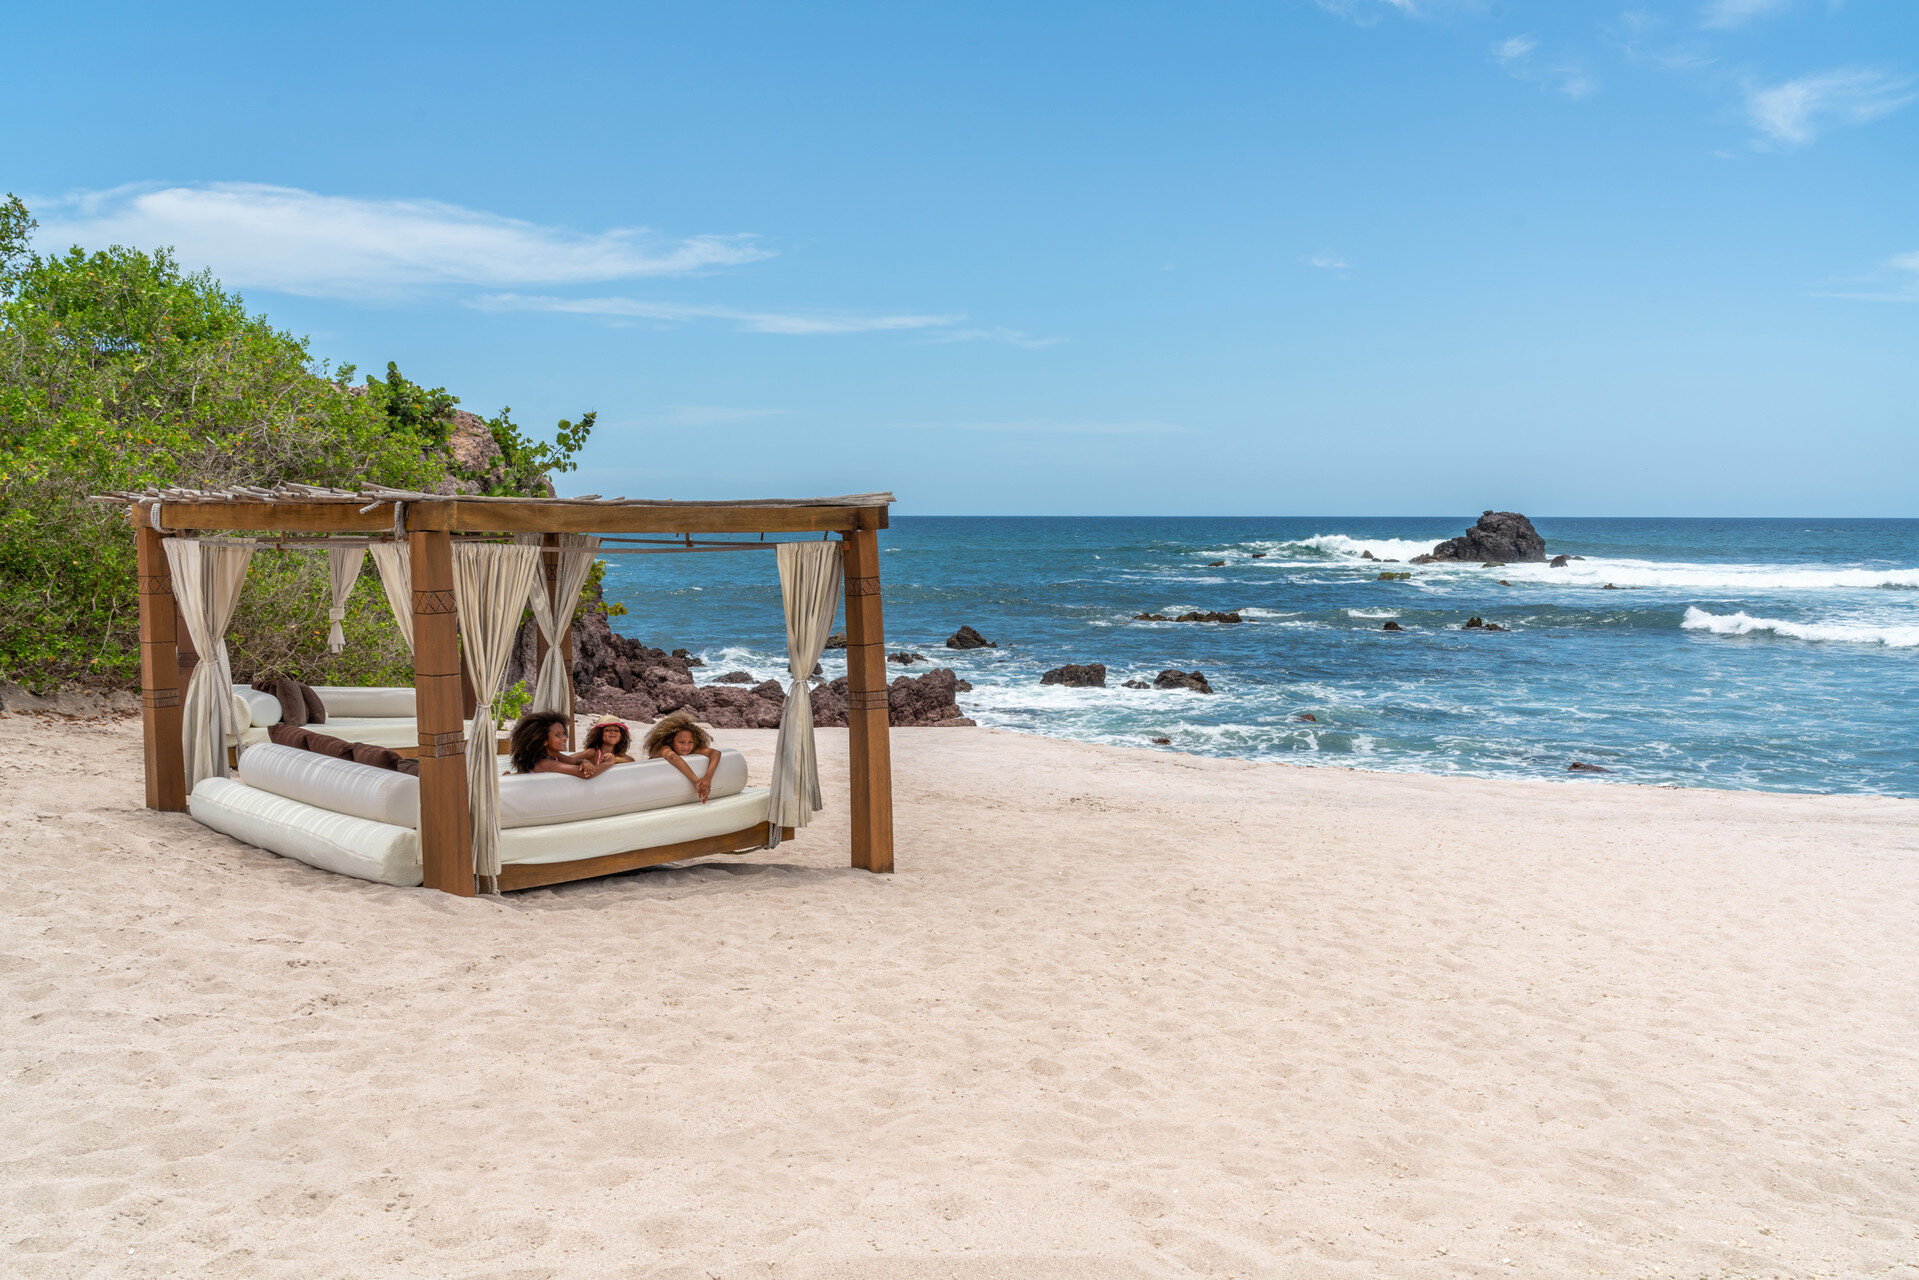   Family beach relaxation at Four Seasons Punta Mita (photo credit: Four Seasons)  